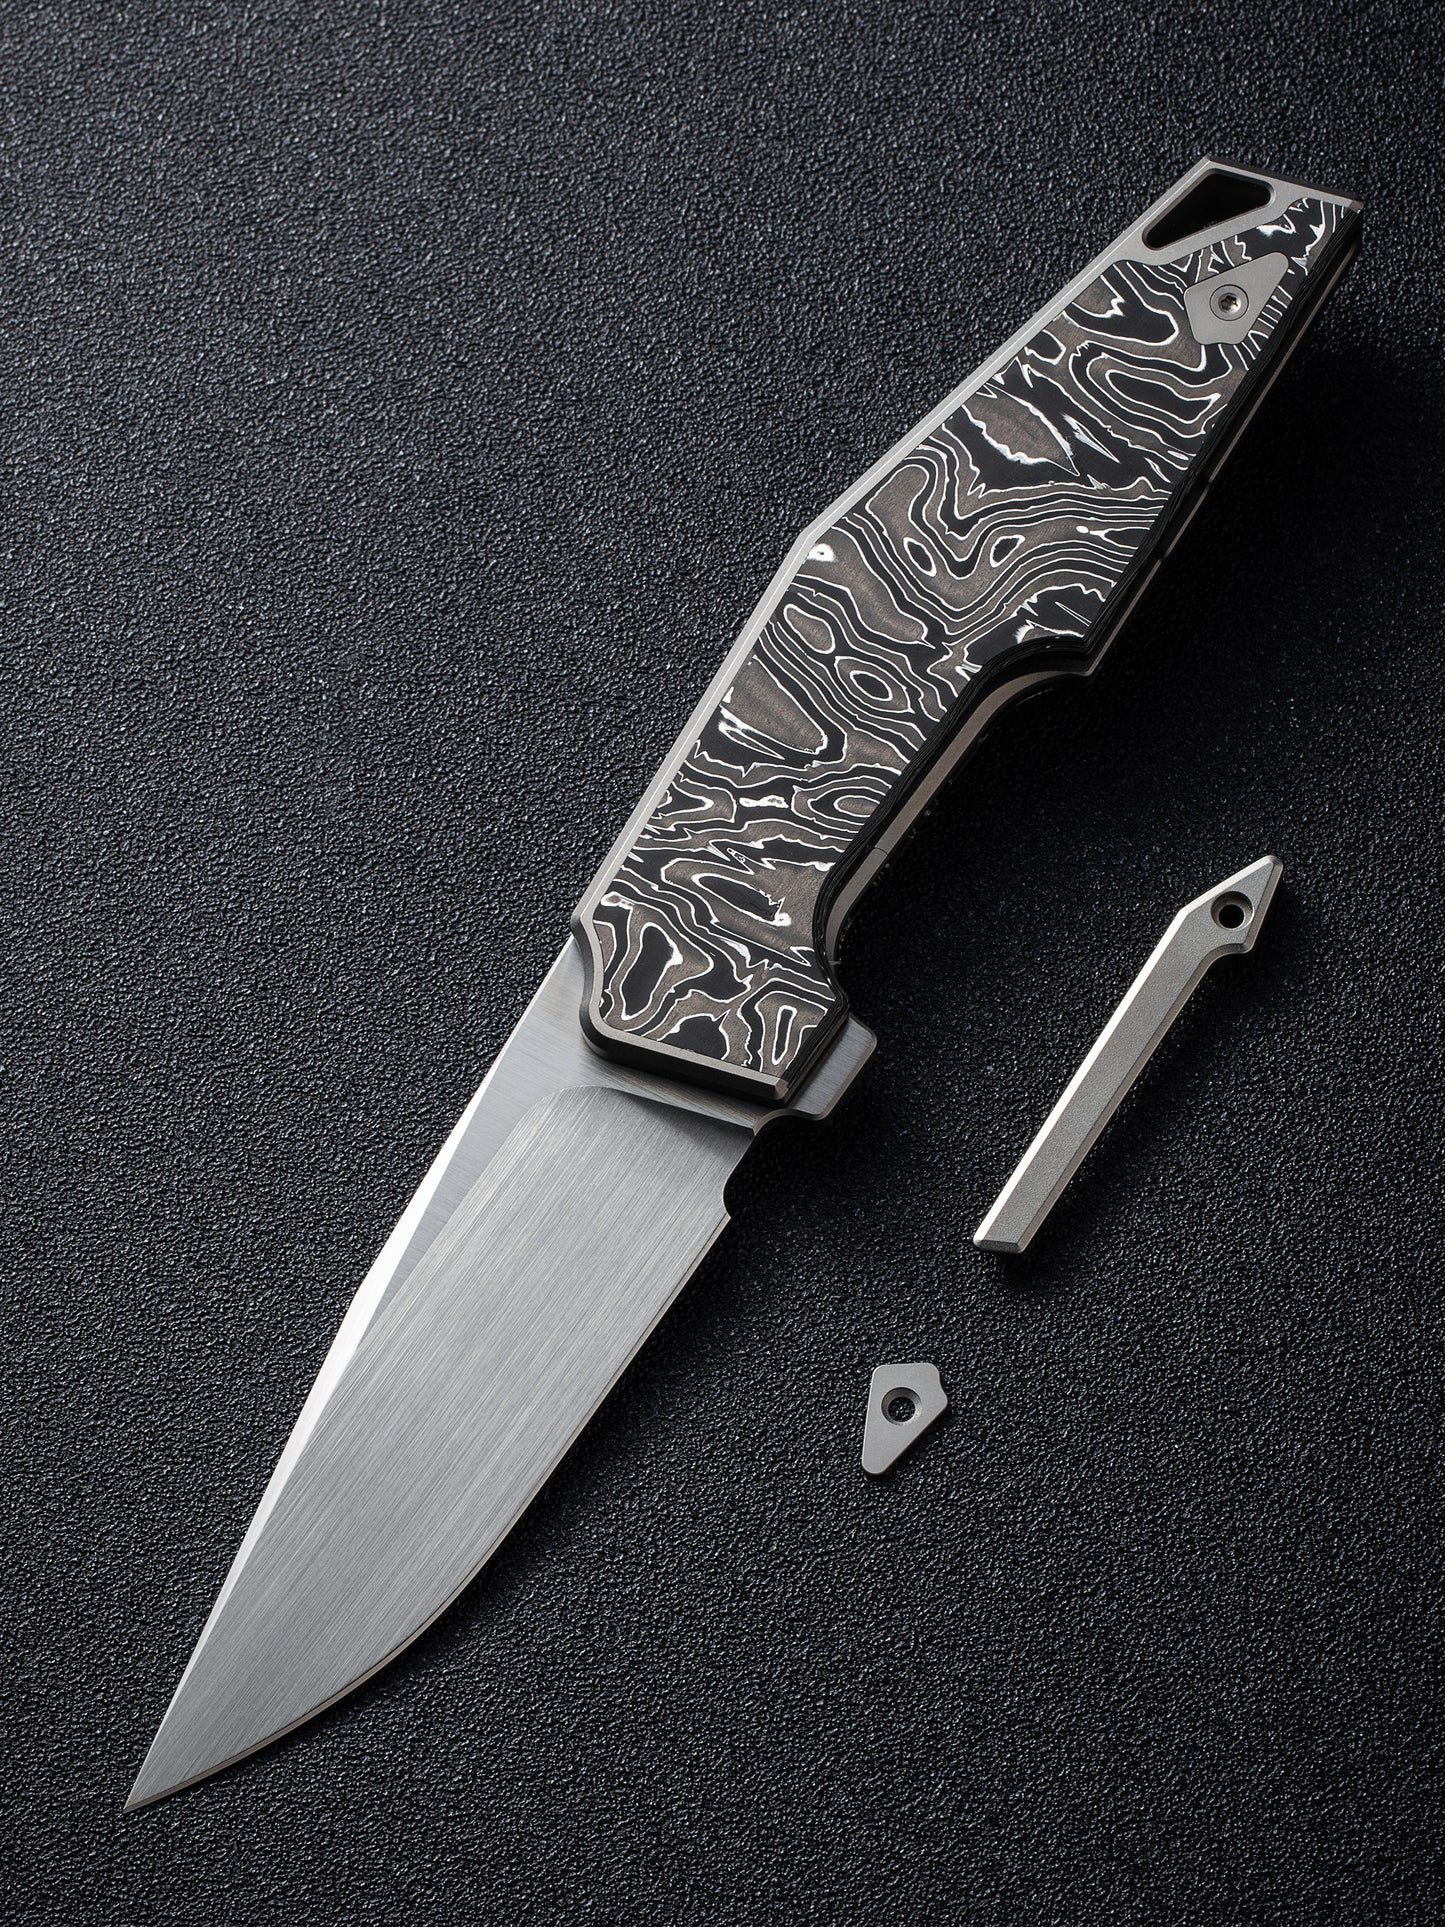 WE OAO 3.4" CPM 20CV Aluminum Foil Carbon Fiber Titanium Folding Knife by Tashi Bharucha WE23001-1